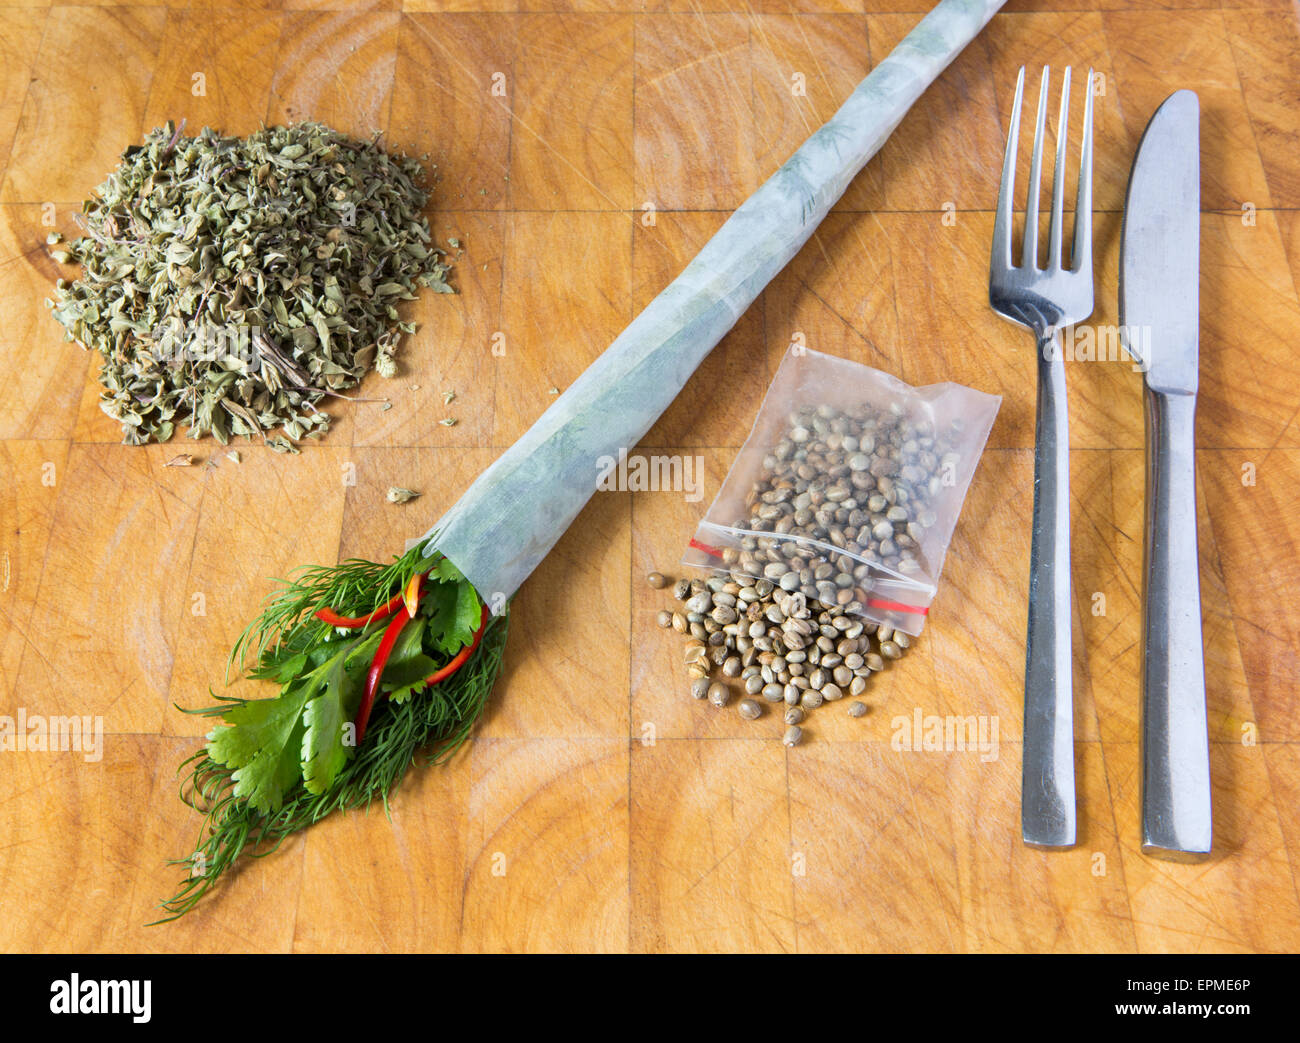 Humorous depiction of a hemp inspired meal featuring hemp seeds, oregano, coriander, dill, rizlas. Stock Photo